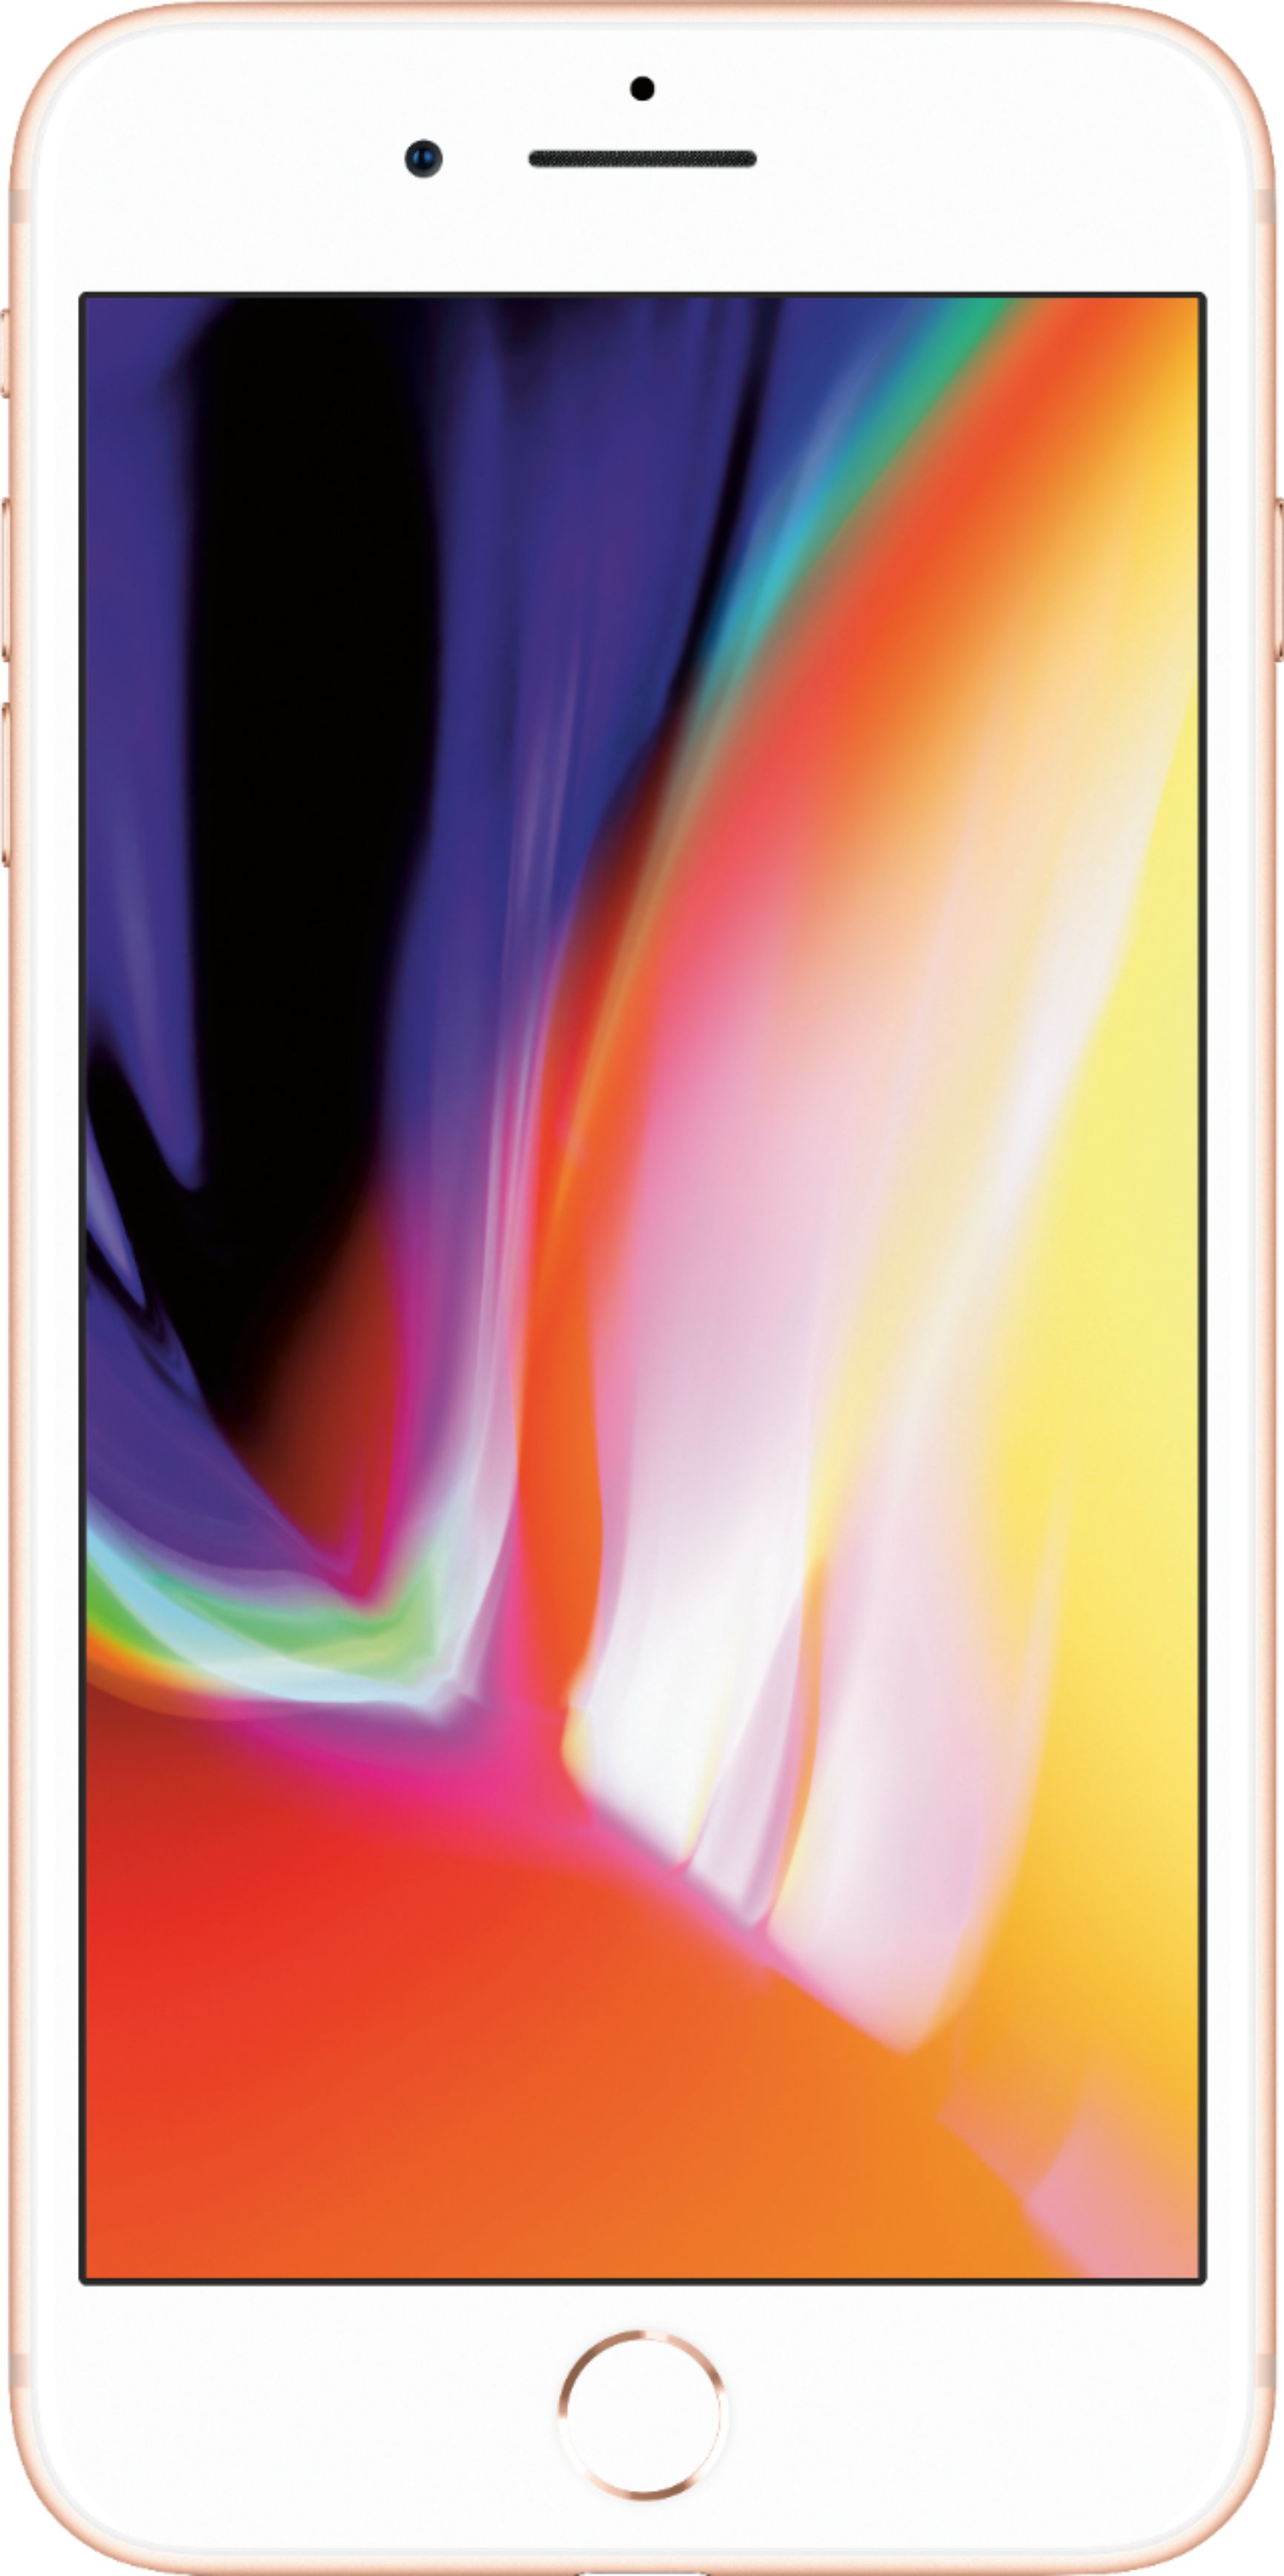 Apple iPhone 8 Plus 256GB Gold (AT&T) MQ8J2LL/A - Best Buy